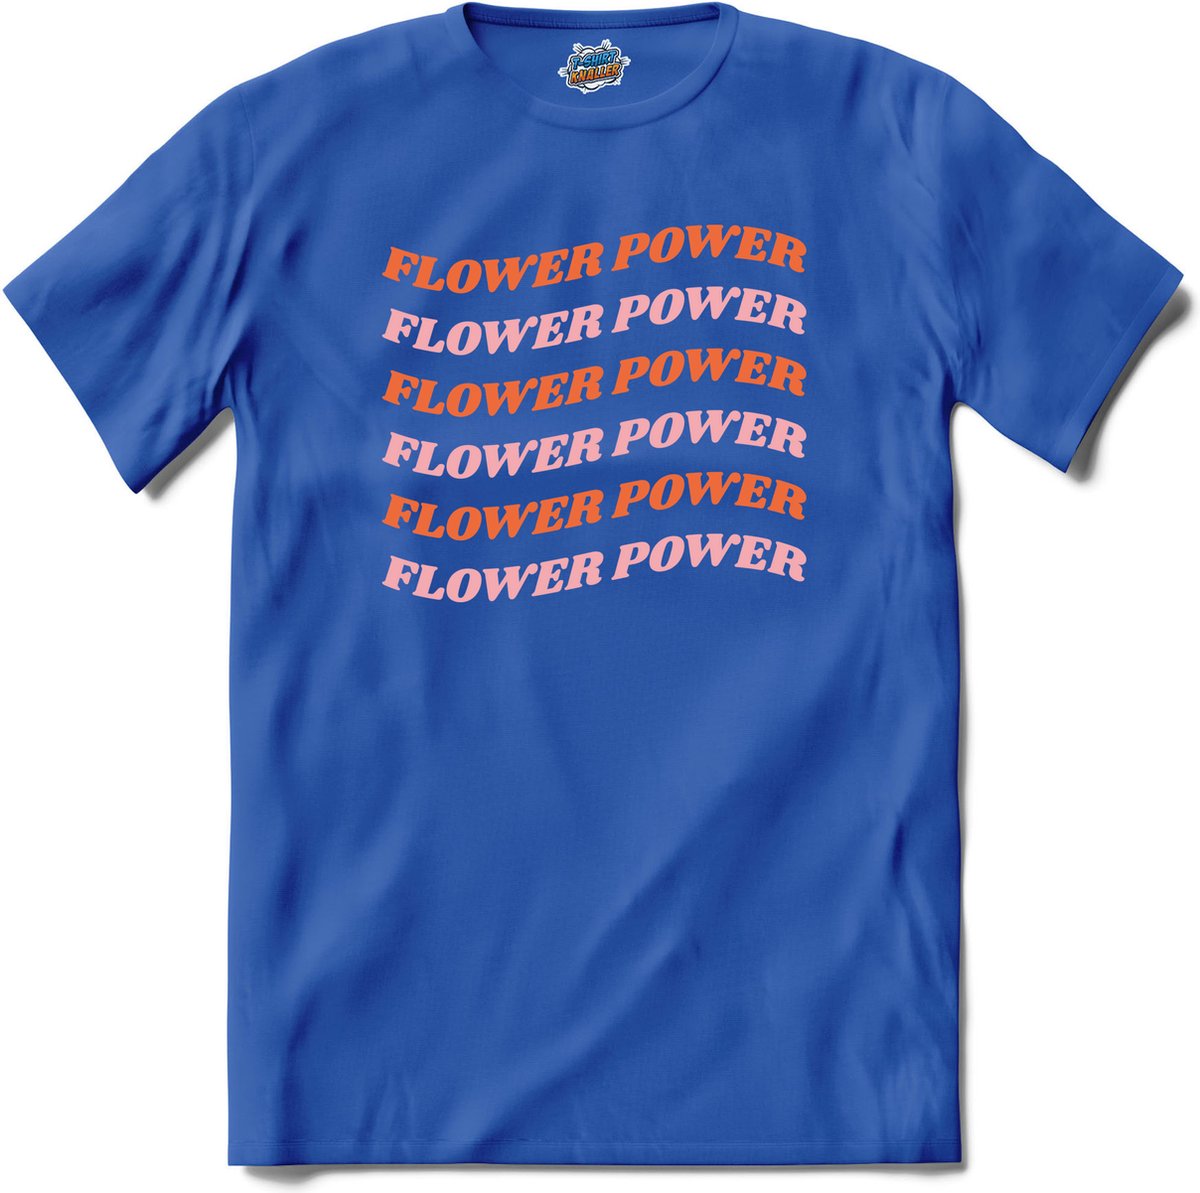 Flower power - T-Shirt - Meisjes - Royal Blue - Maat 4 jaar